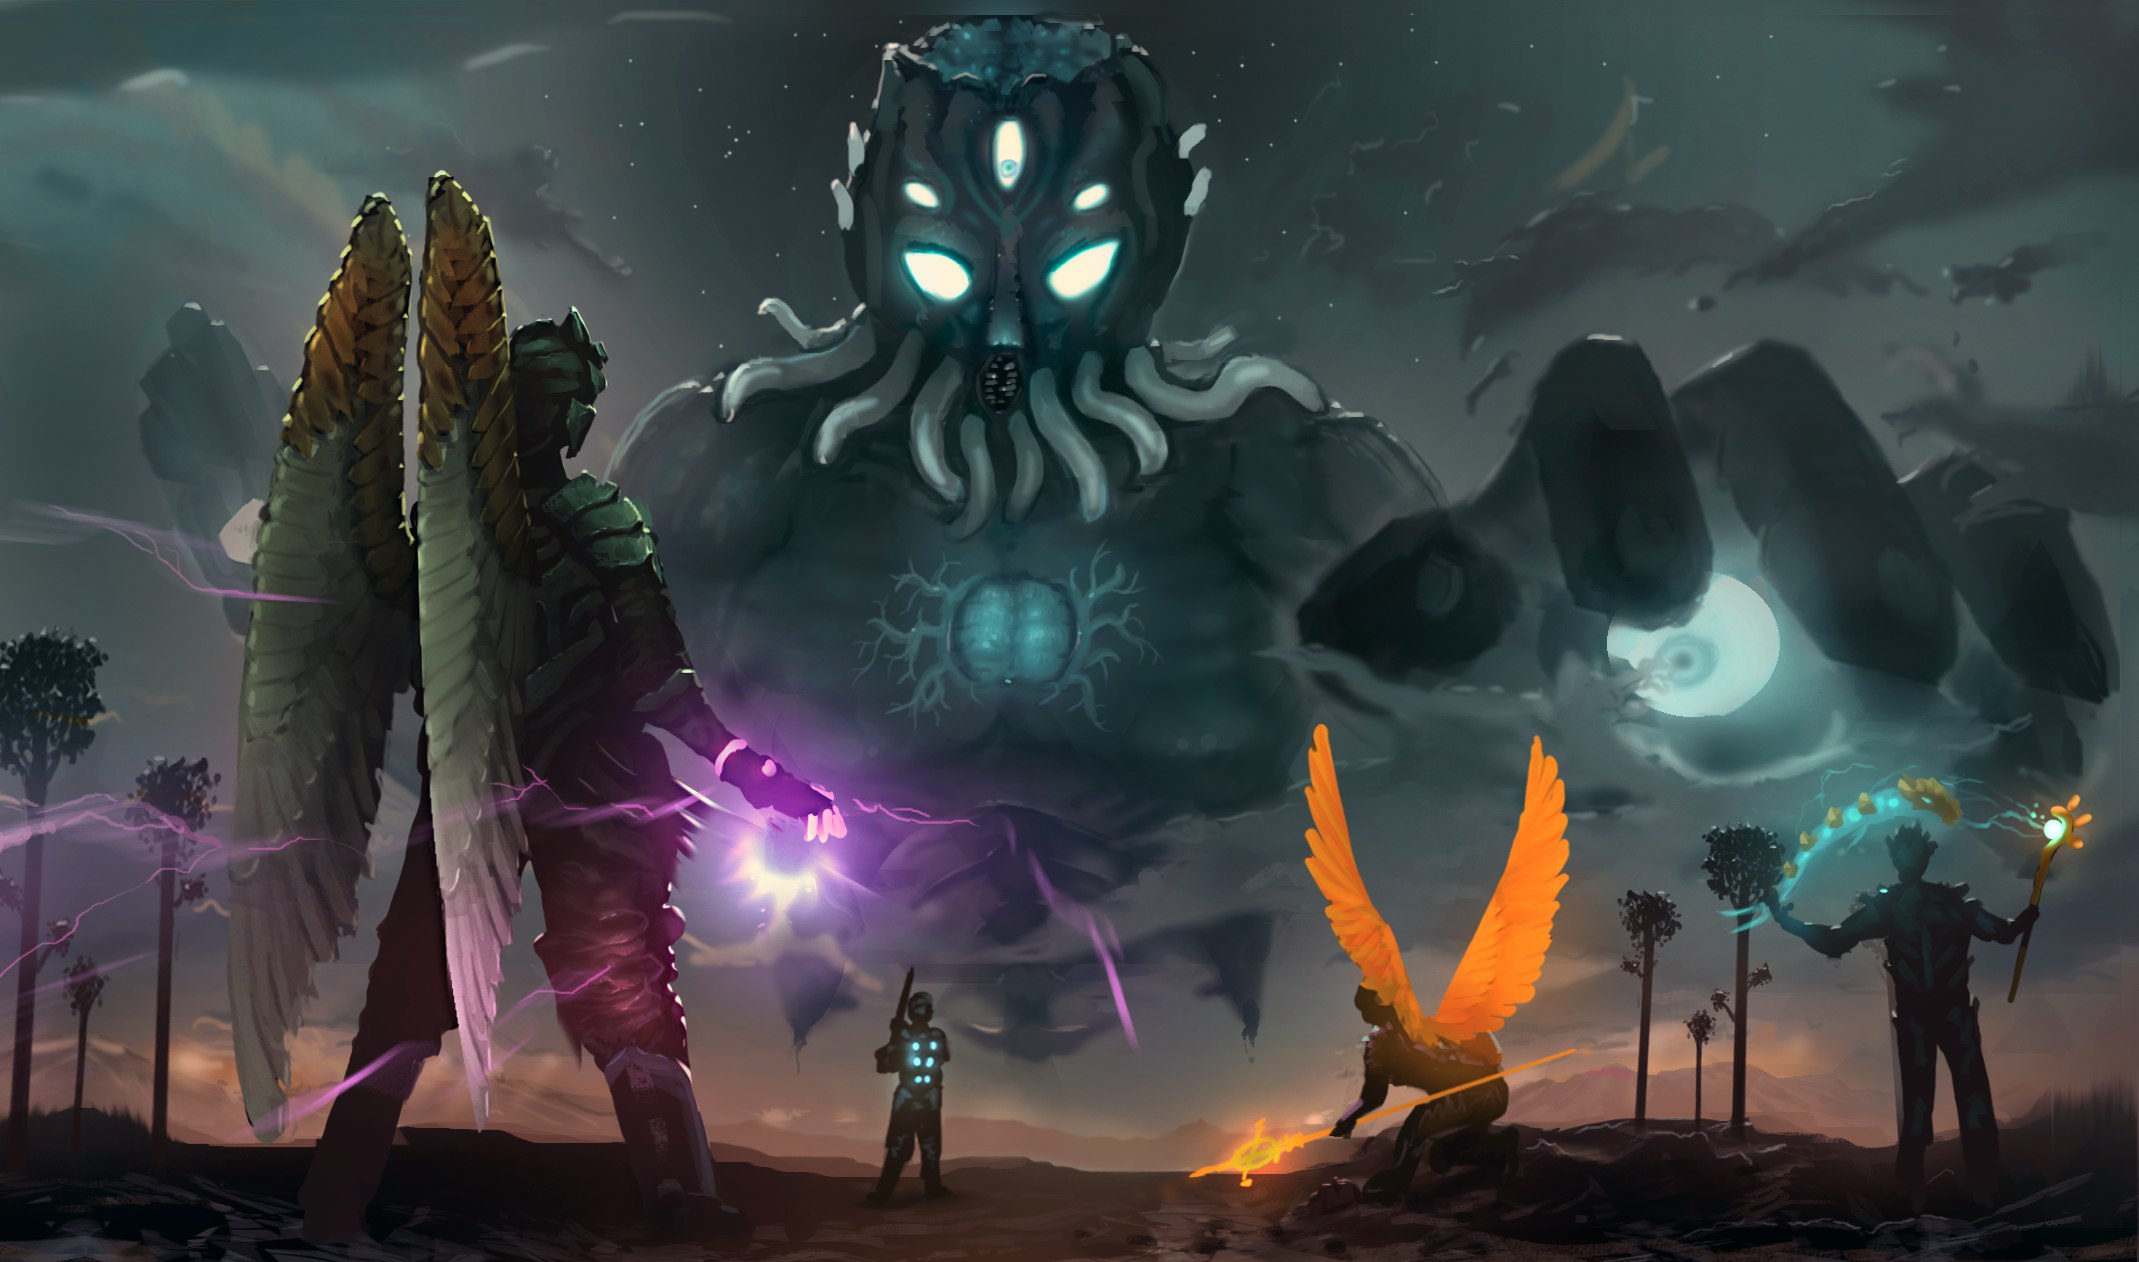 terraria wallpaper,pc game,action adventure game,cg artwork,fictional character,screenshot